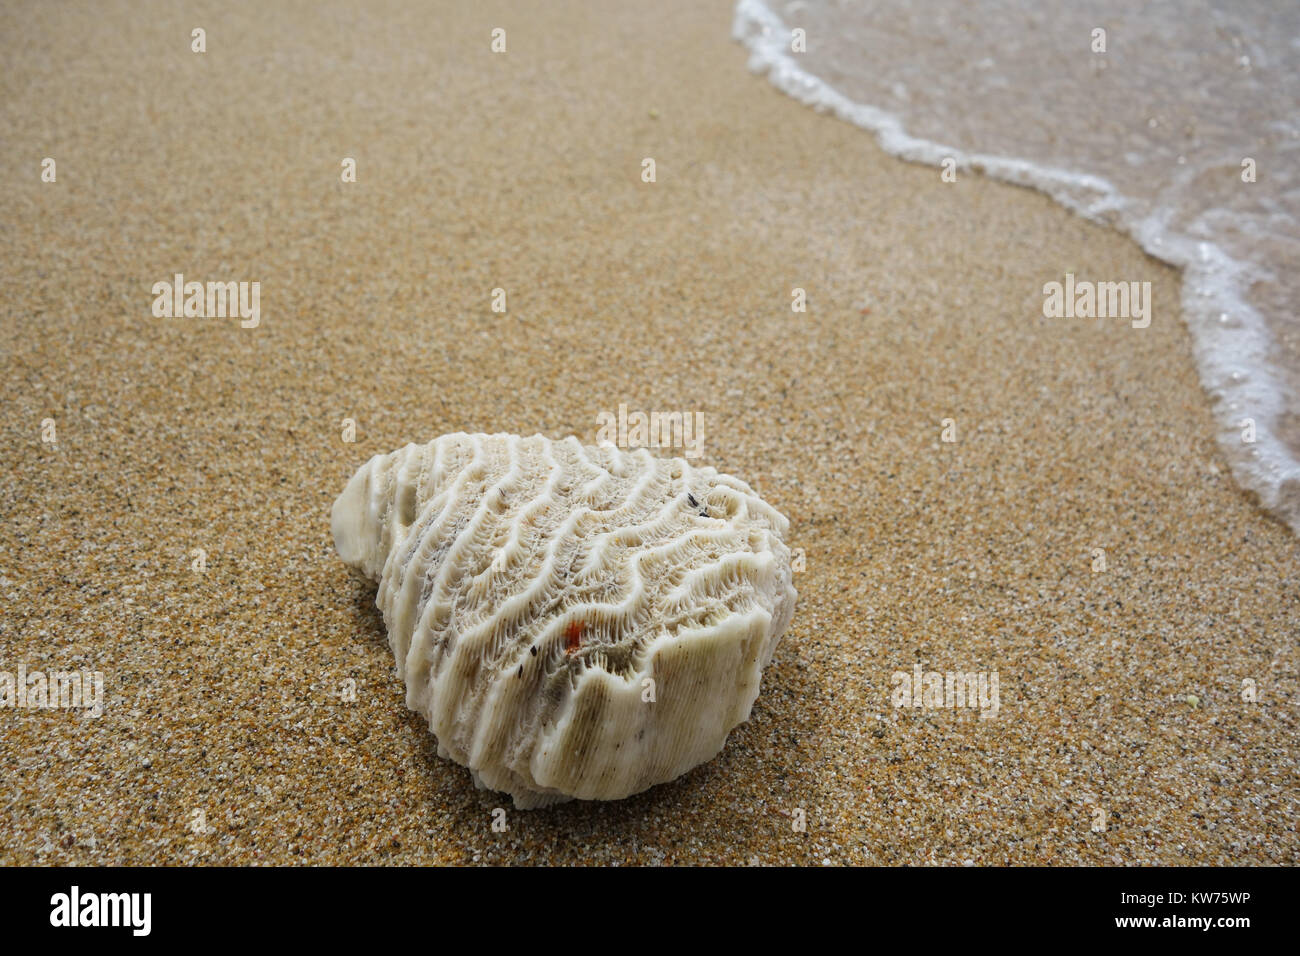 stony coral on the beach Stock Photo